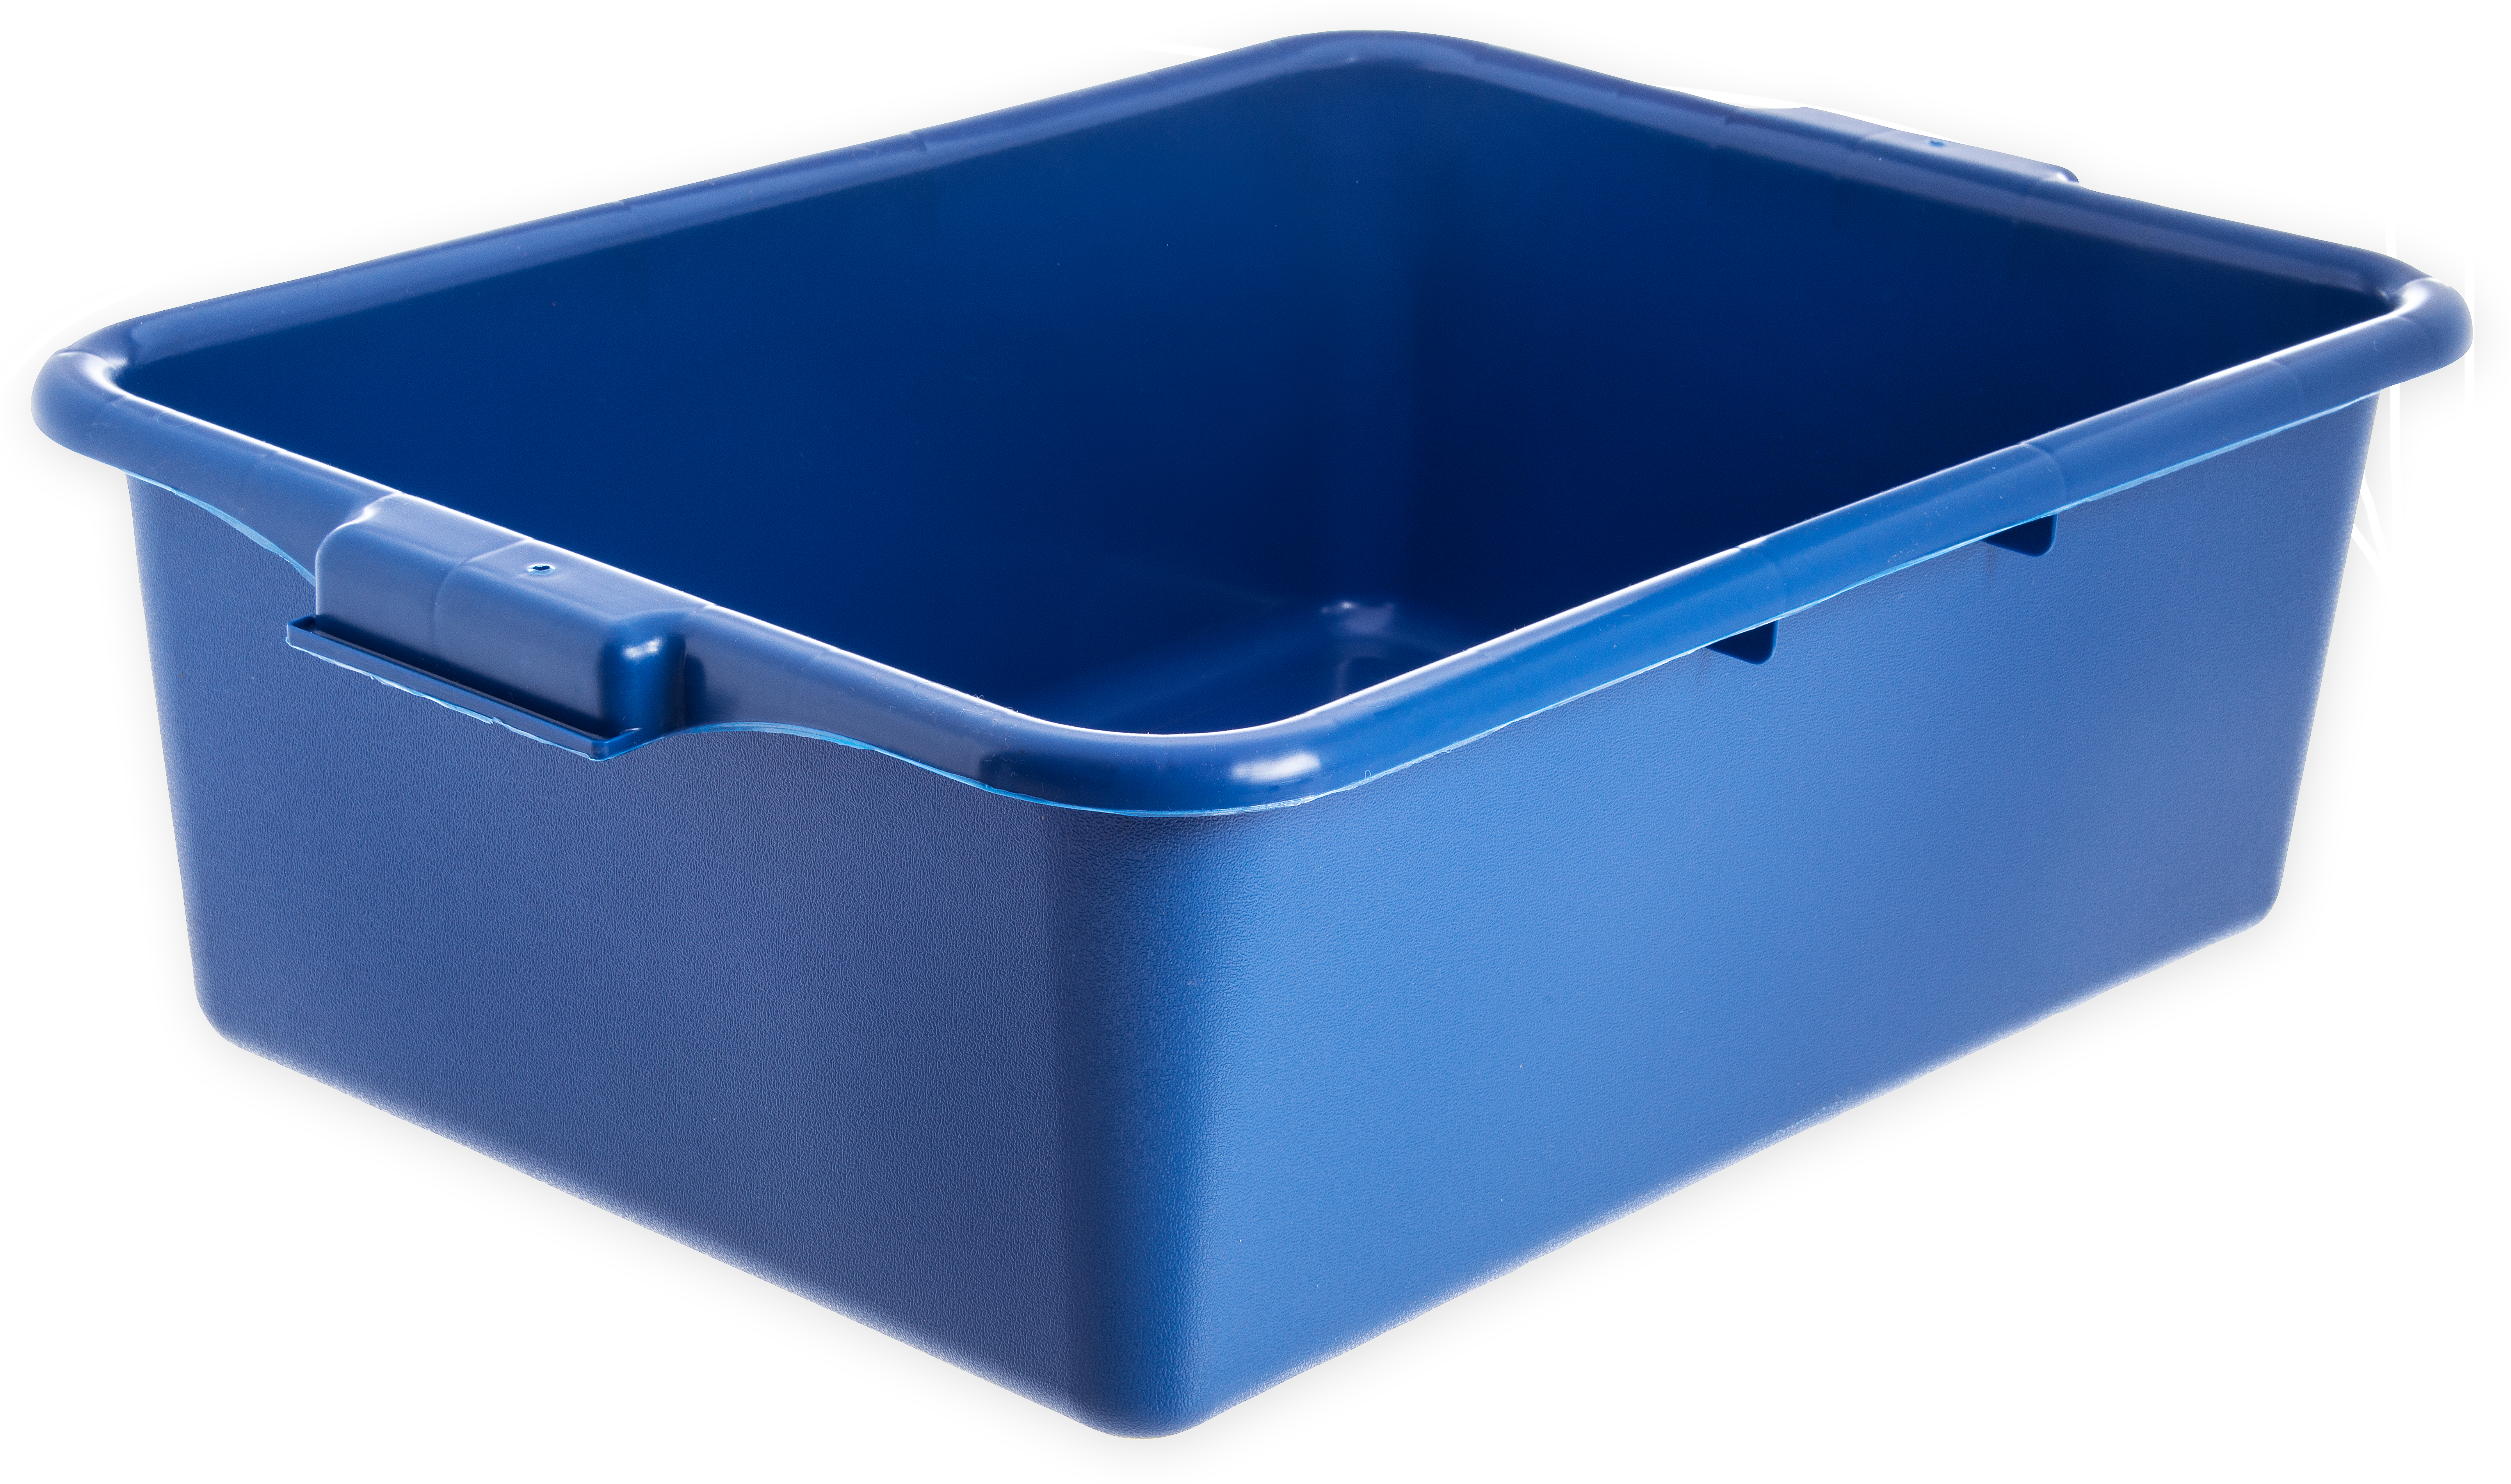 Comfort Curve Tote Box 20 x 15 x 7 - Blue